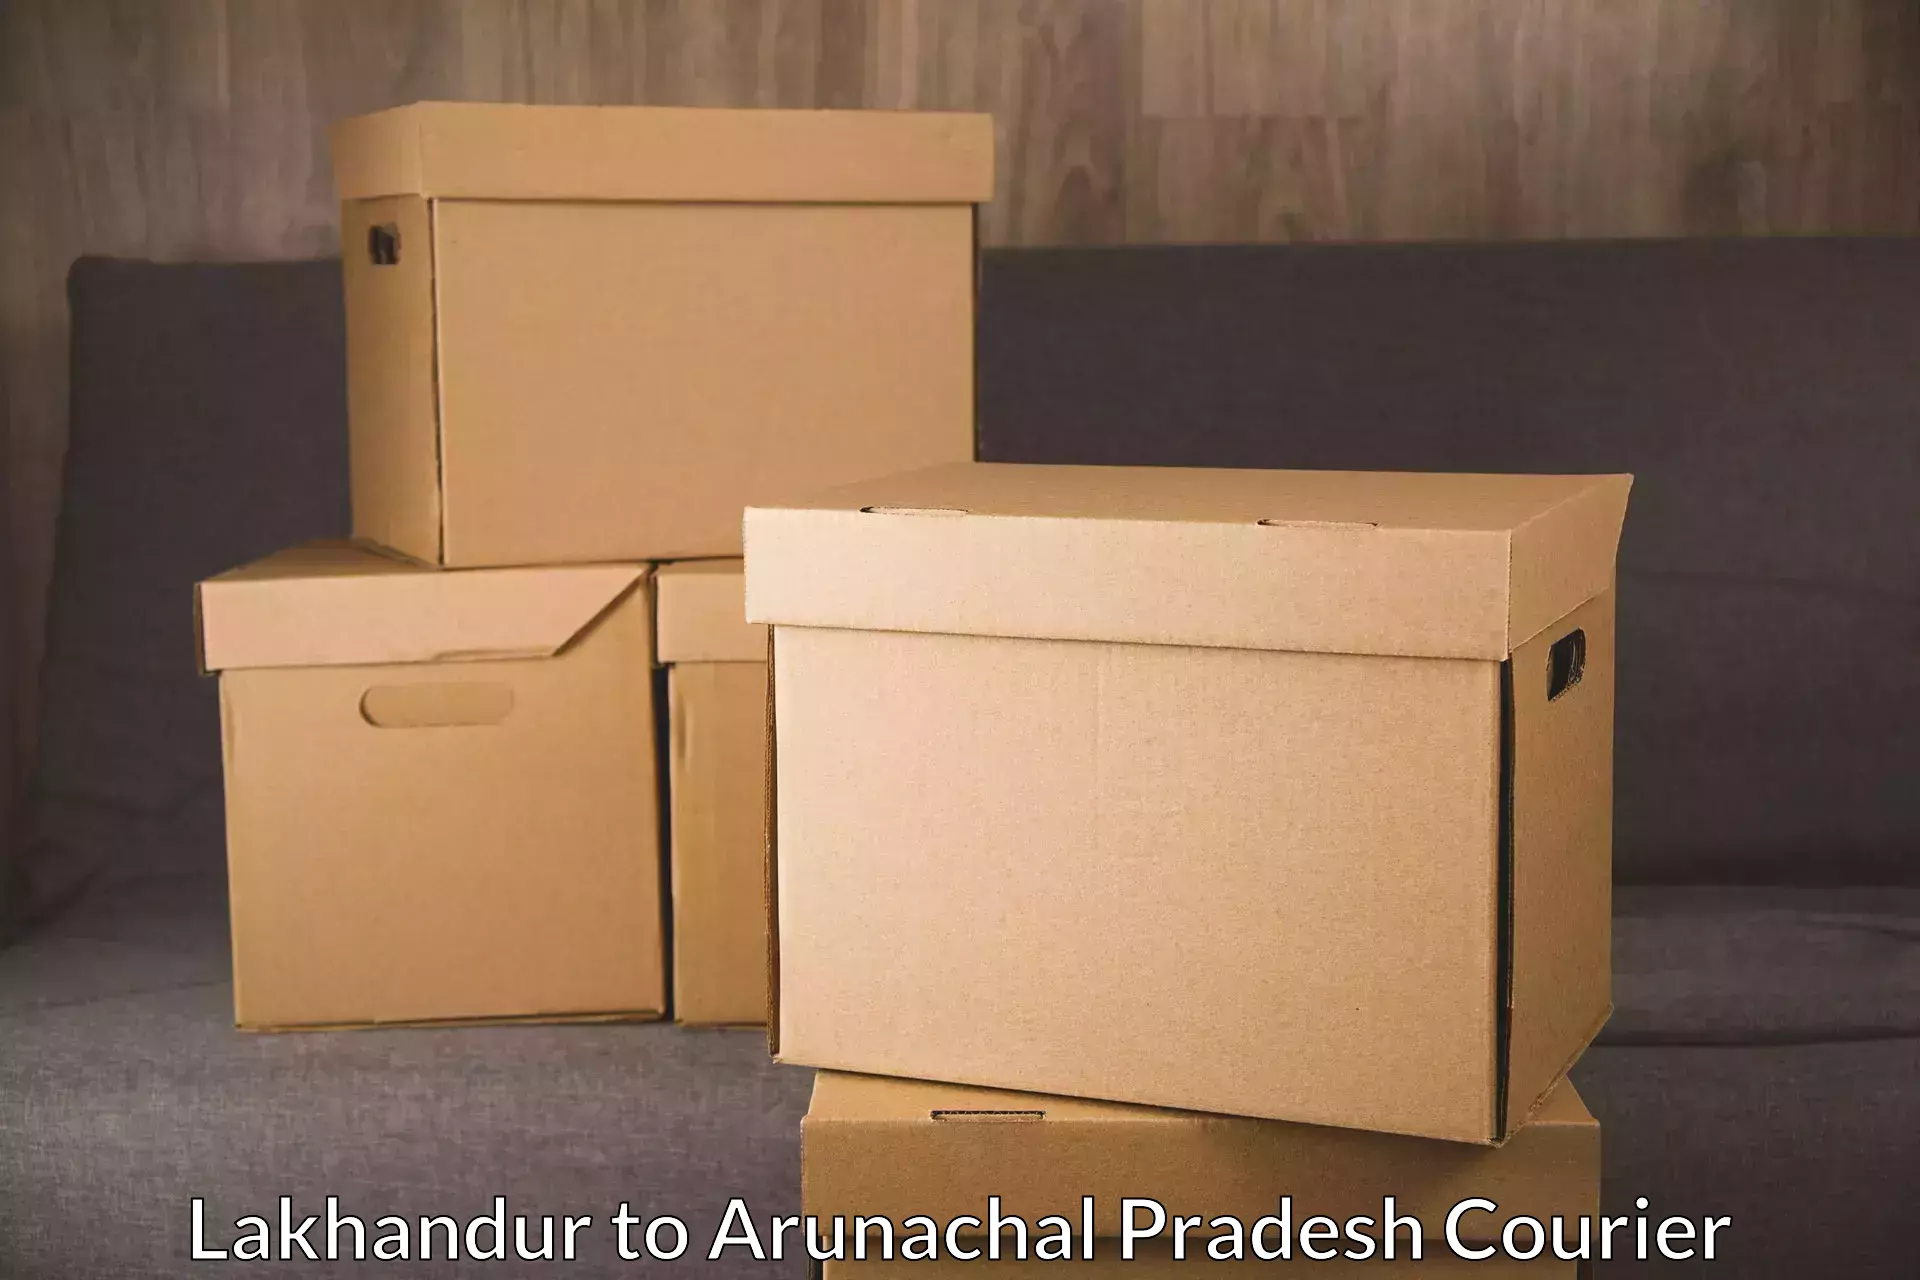 Express delivery network Lakhandur to Arunachal Pradesh